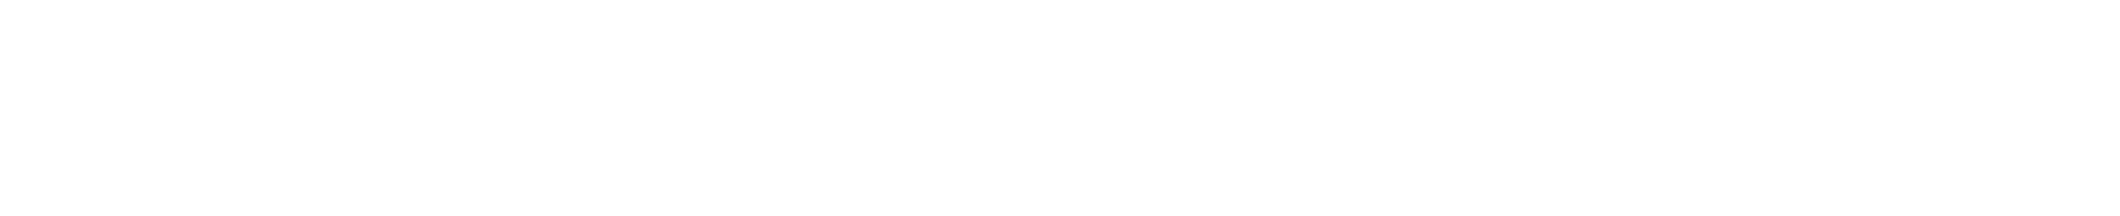 App Entwickler München Logo Footer